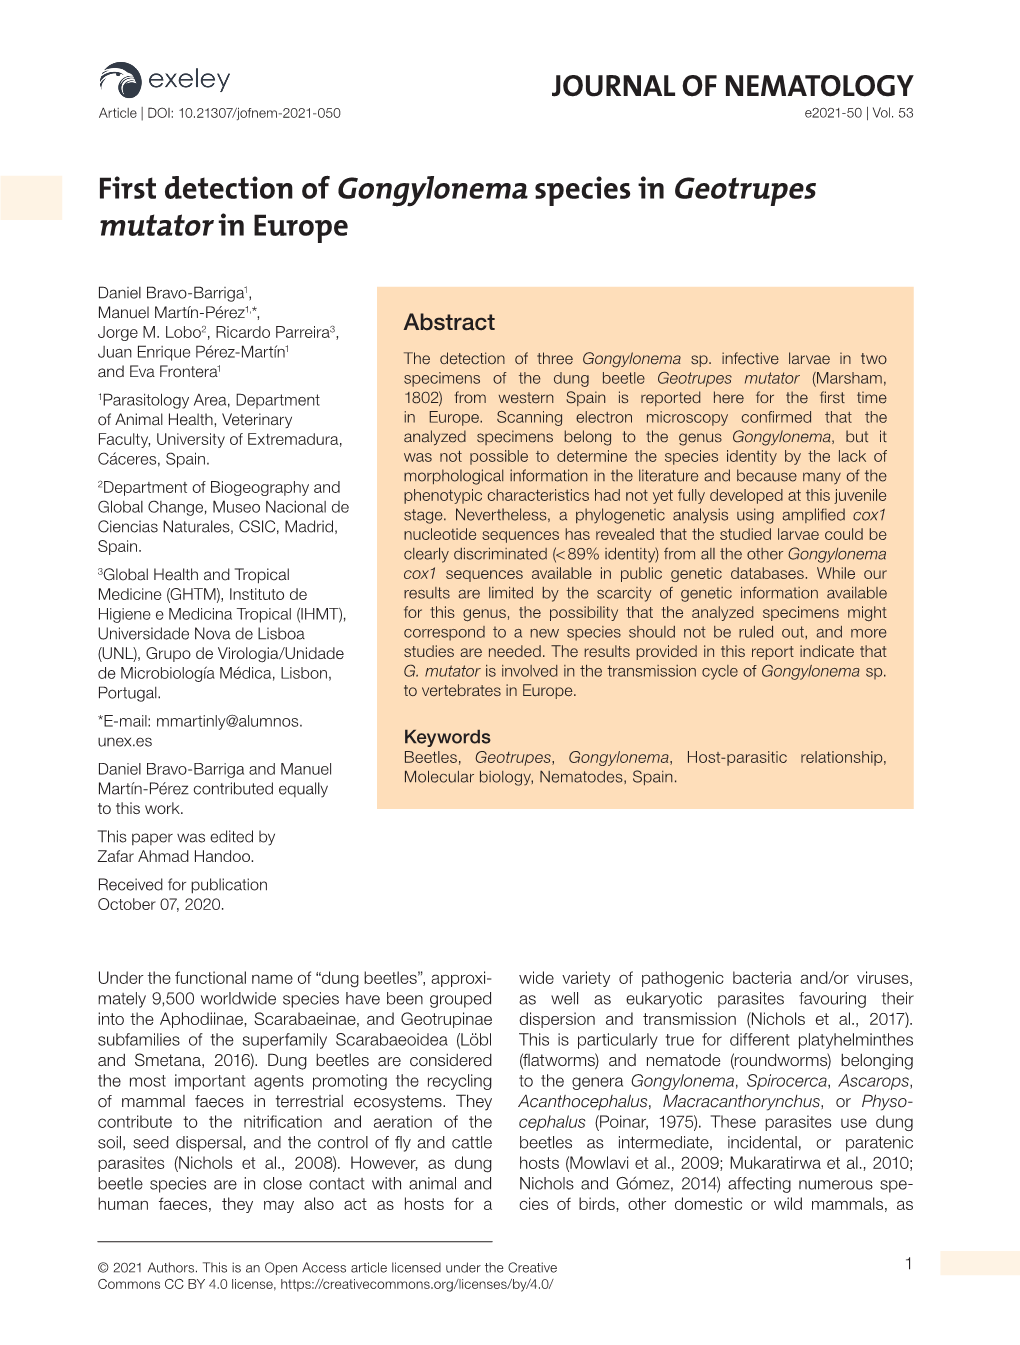 First Detection of Gongylonema Species in Geotrupes Mutator in Europe